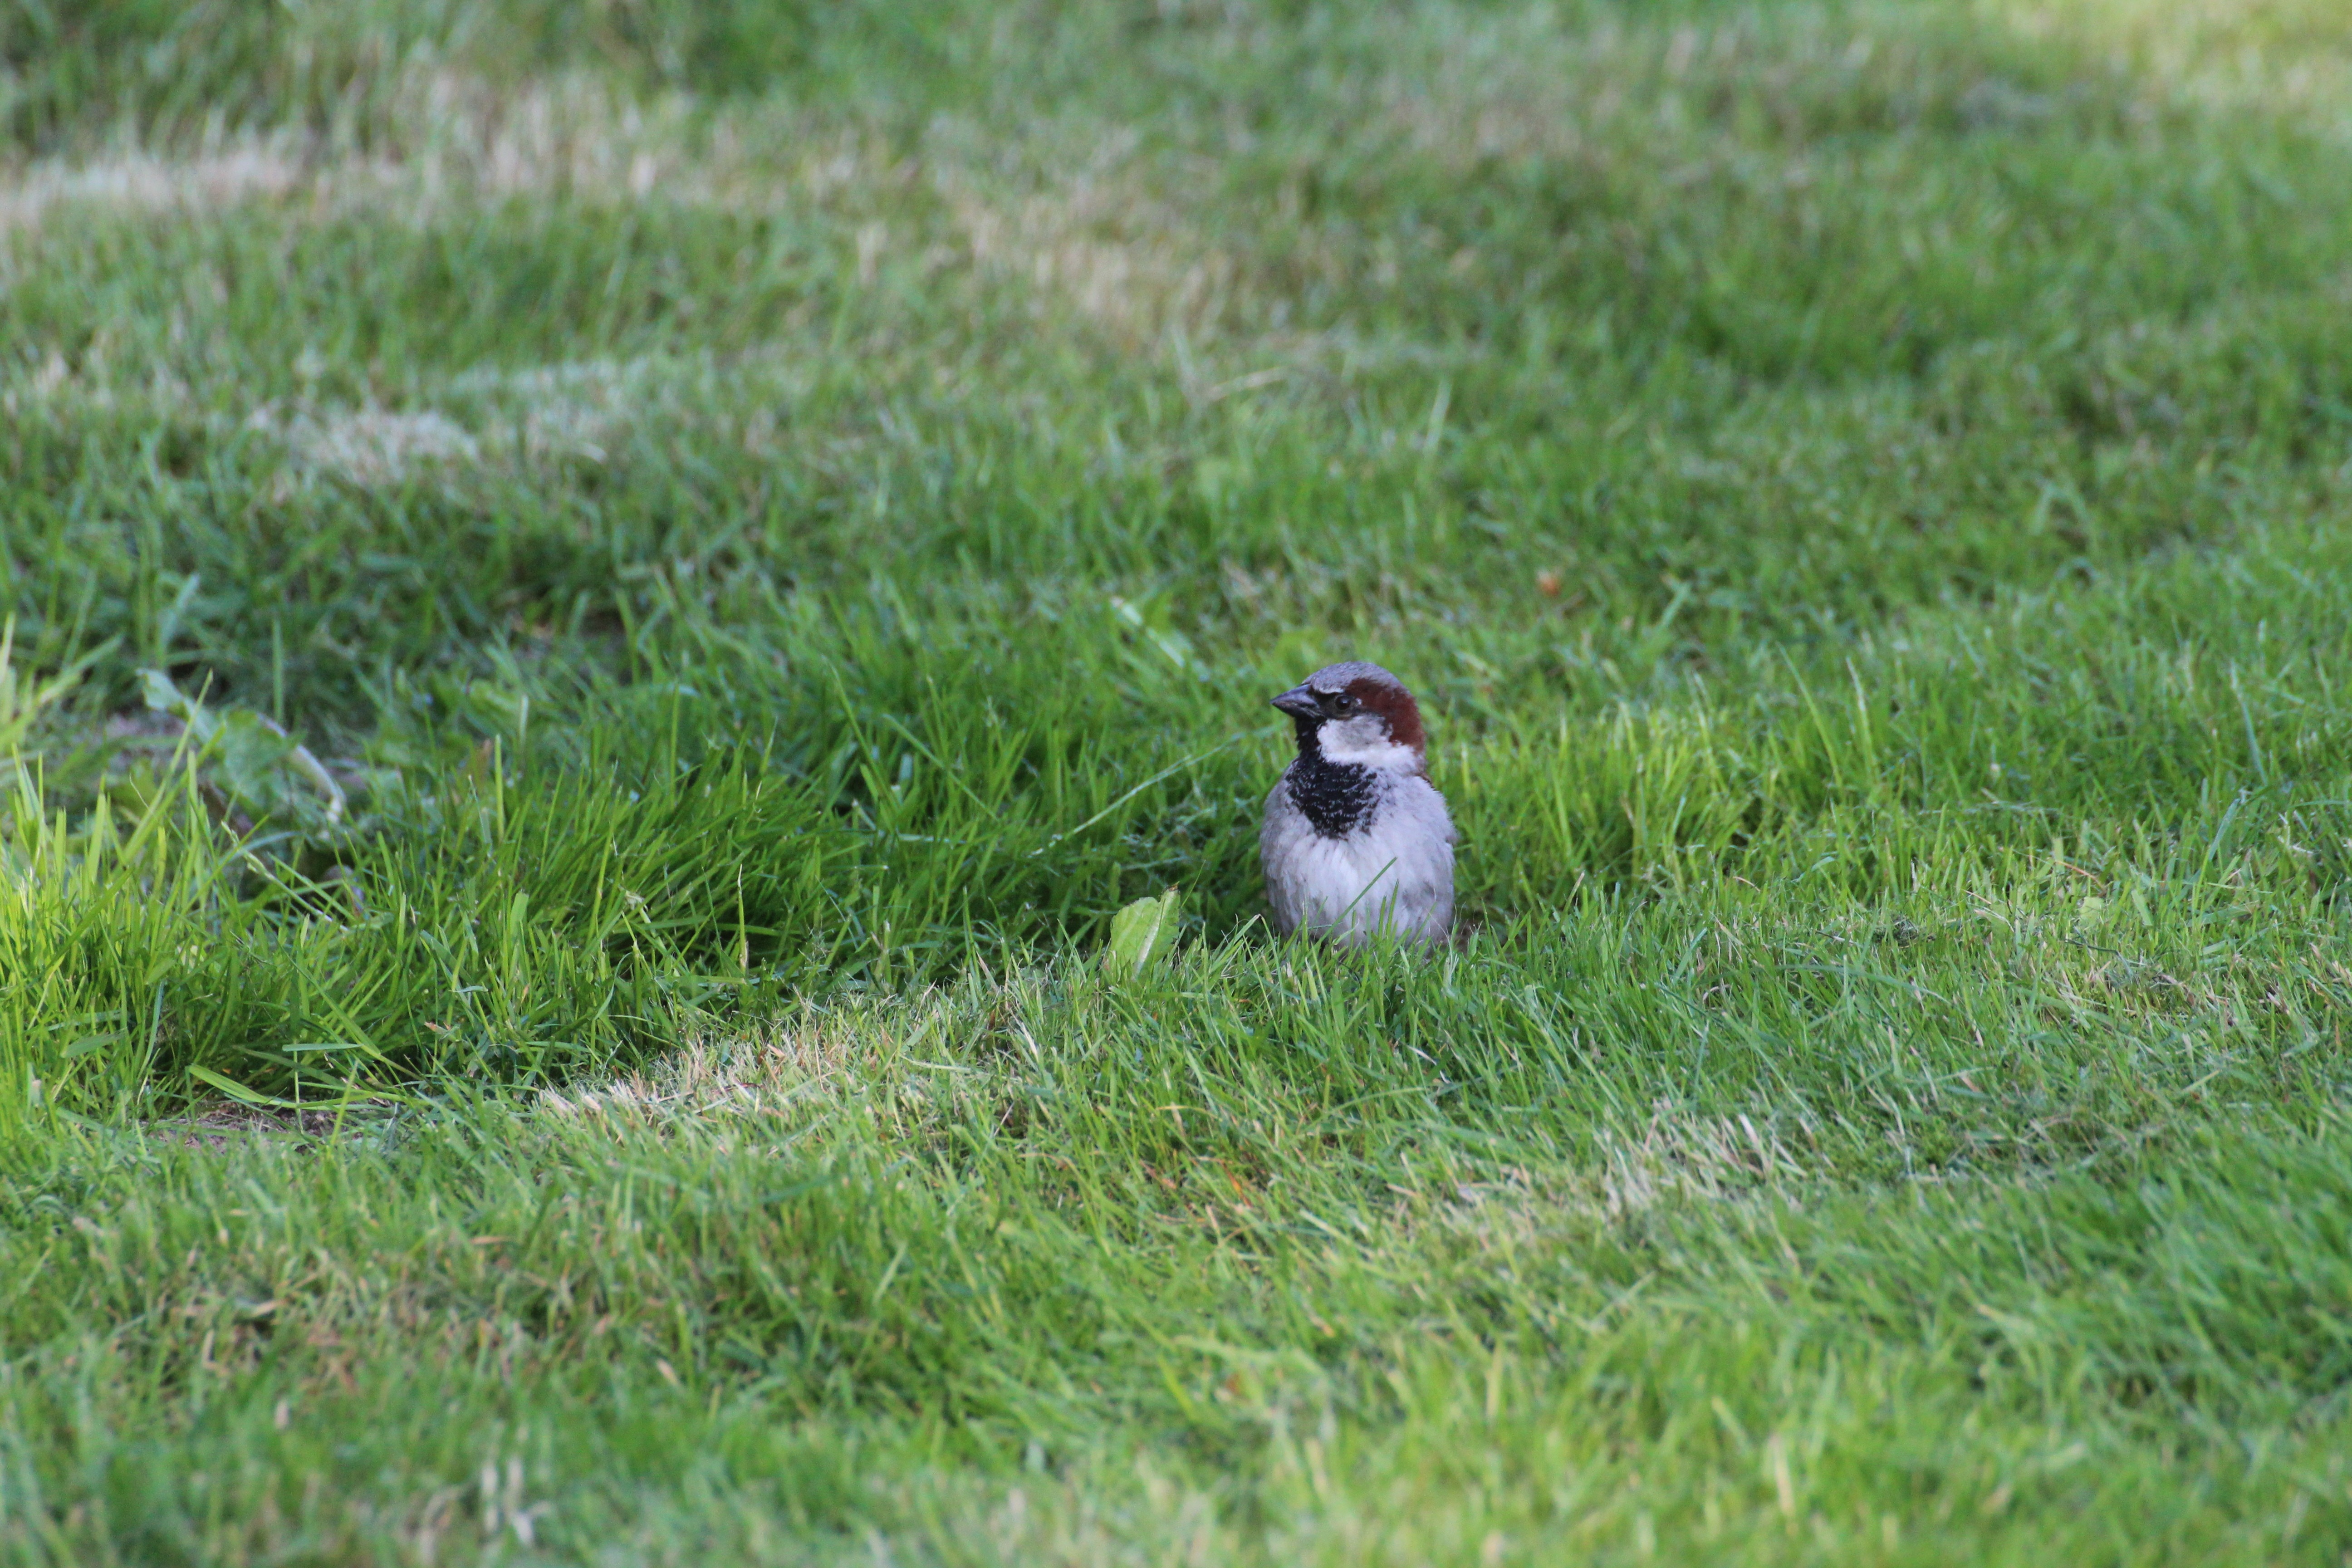 photo of gray bird on green grass field